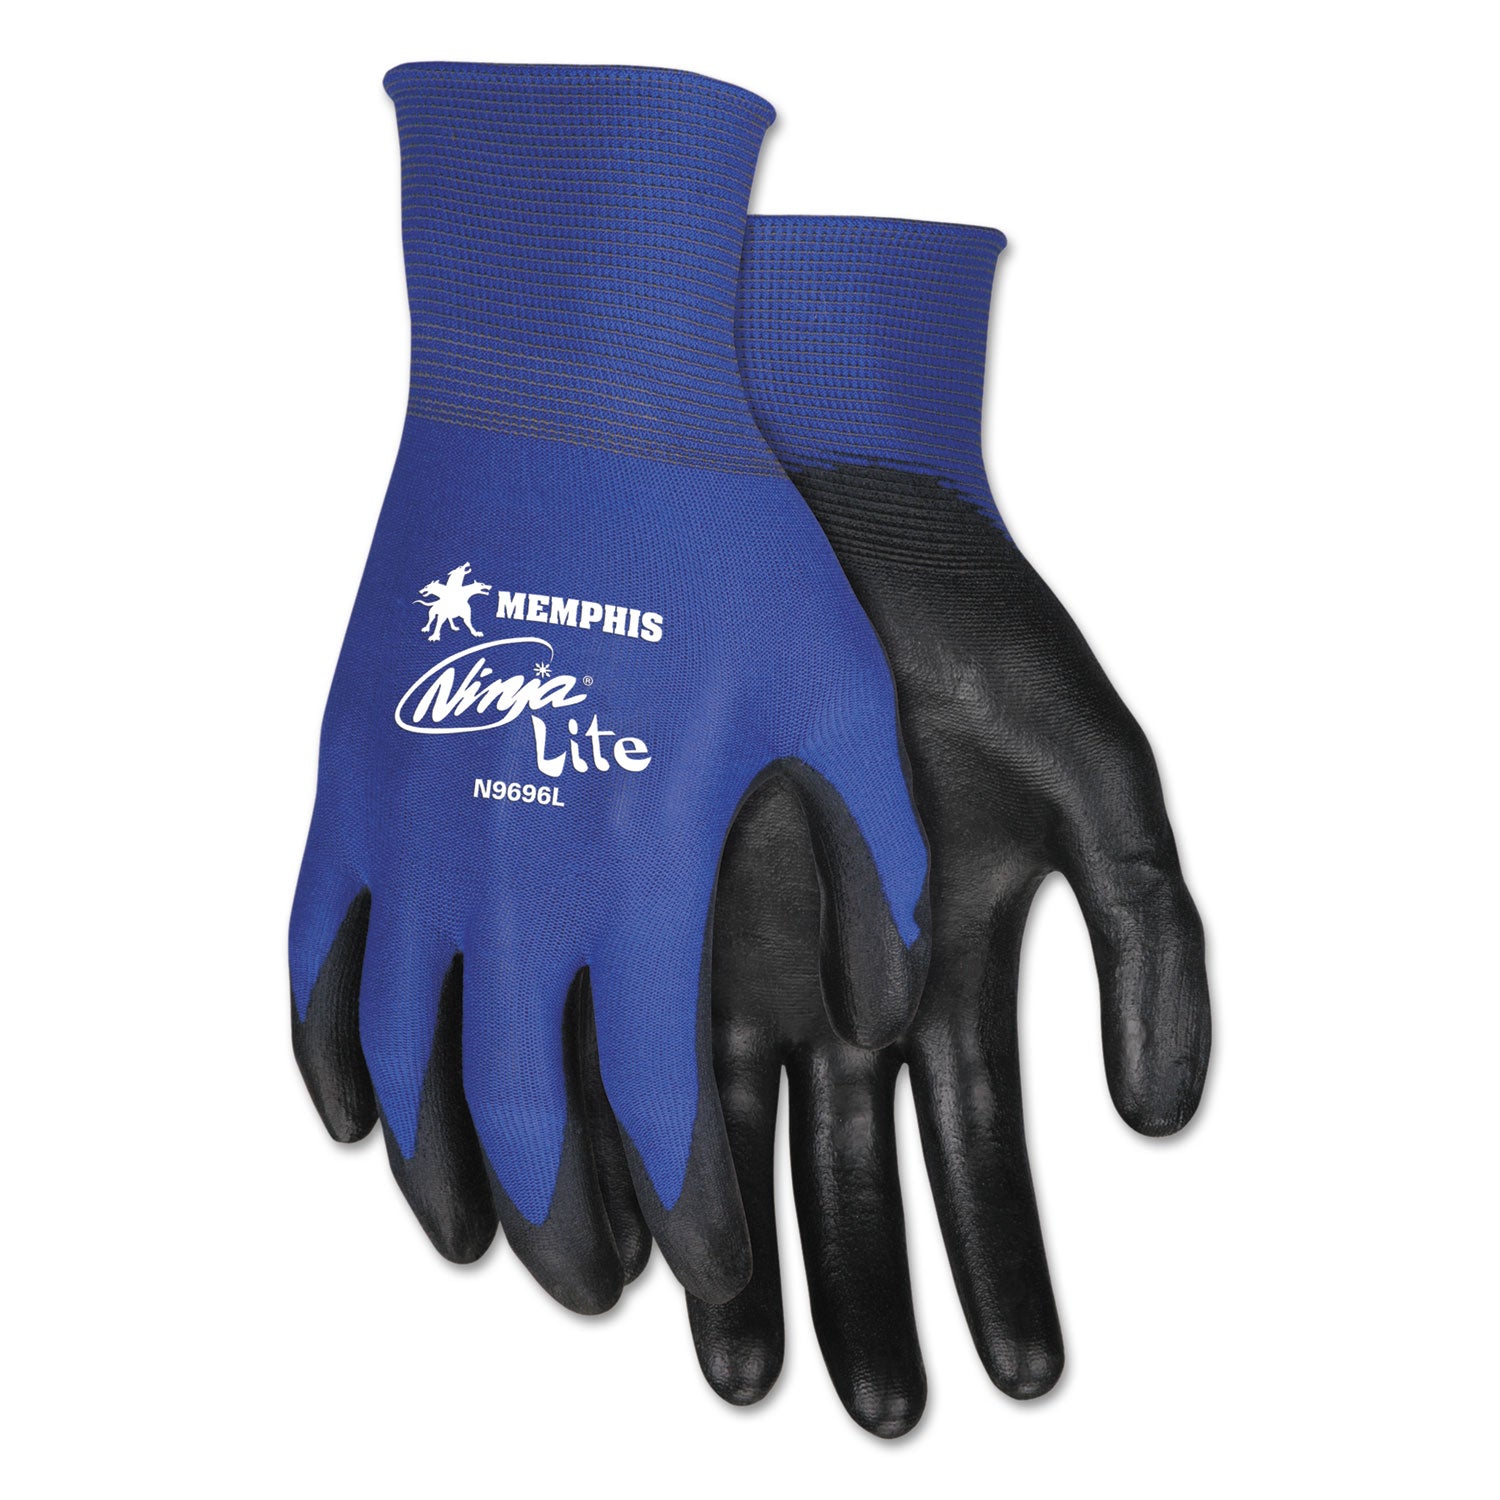 Ultra Tech TaCartonile Dexterity Work Gloves, Blue/Black, Large, Dozen - 